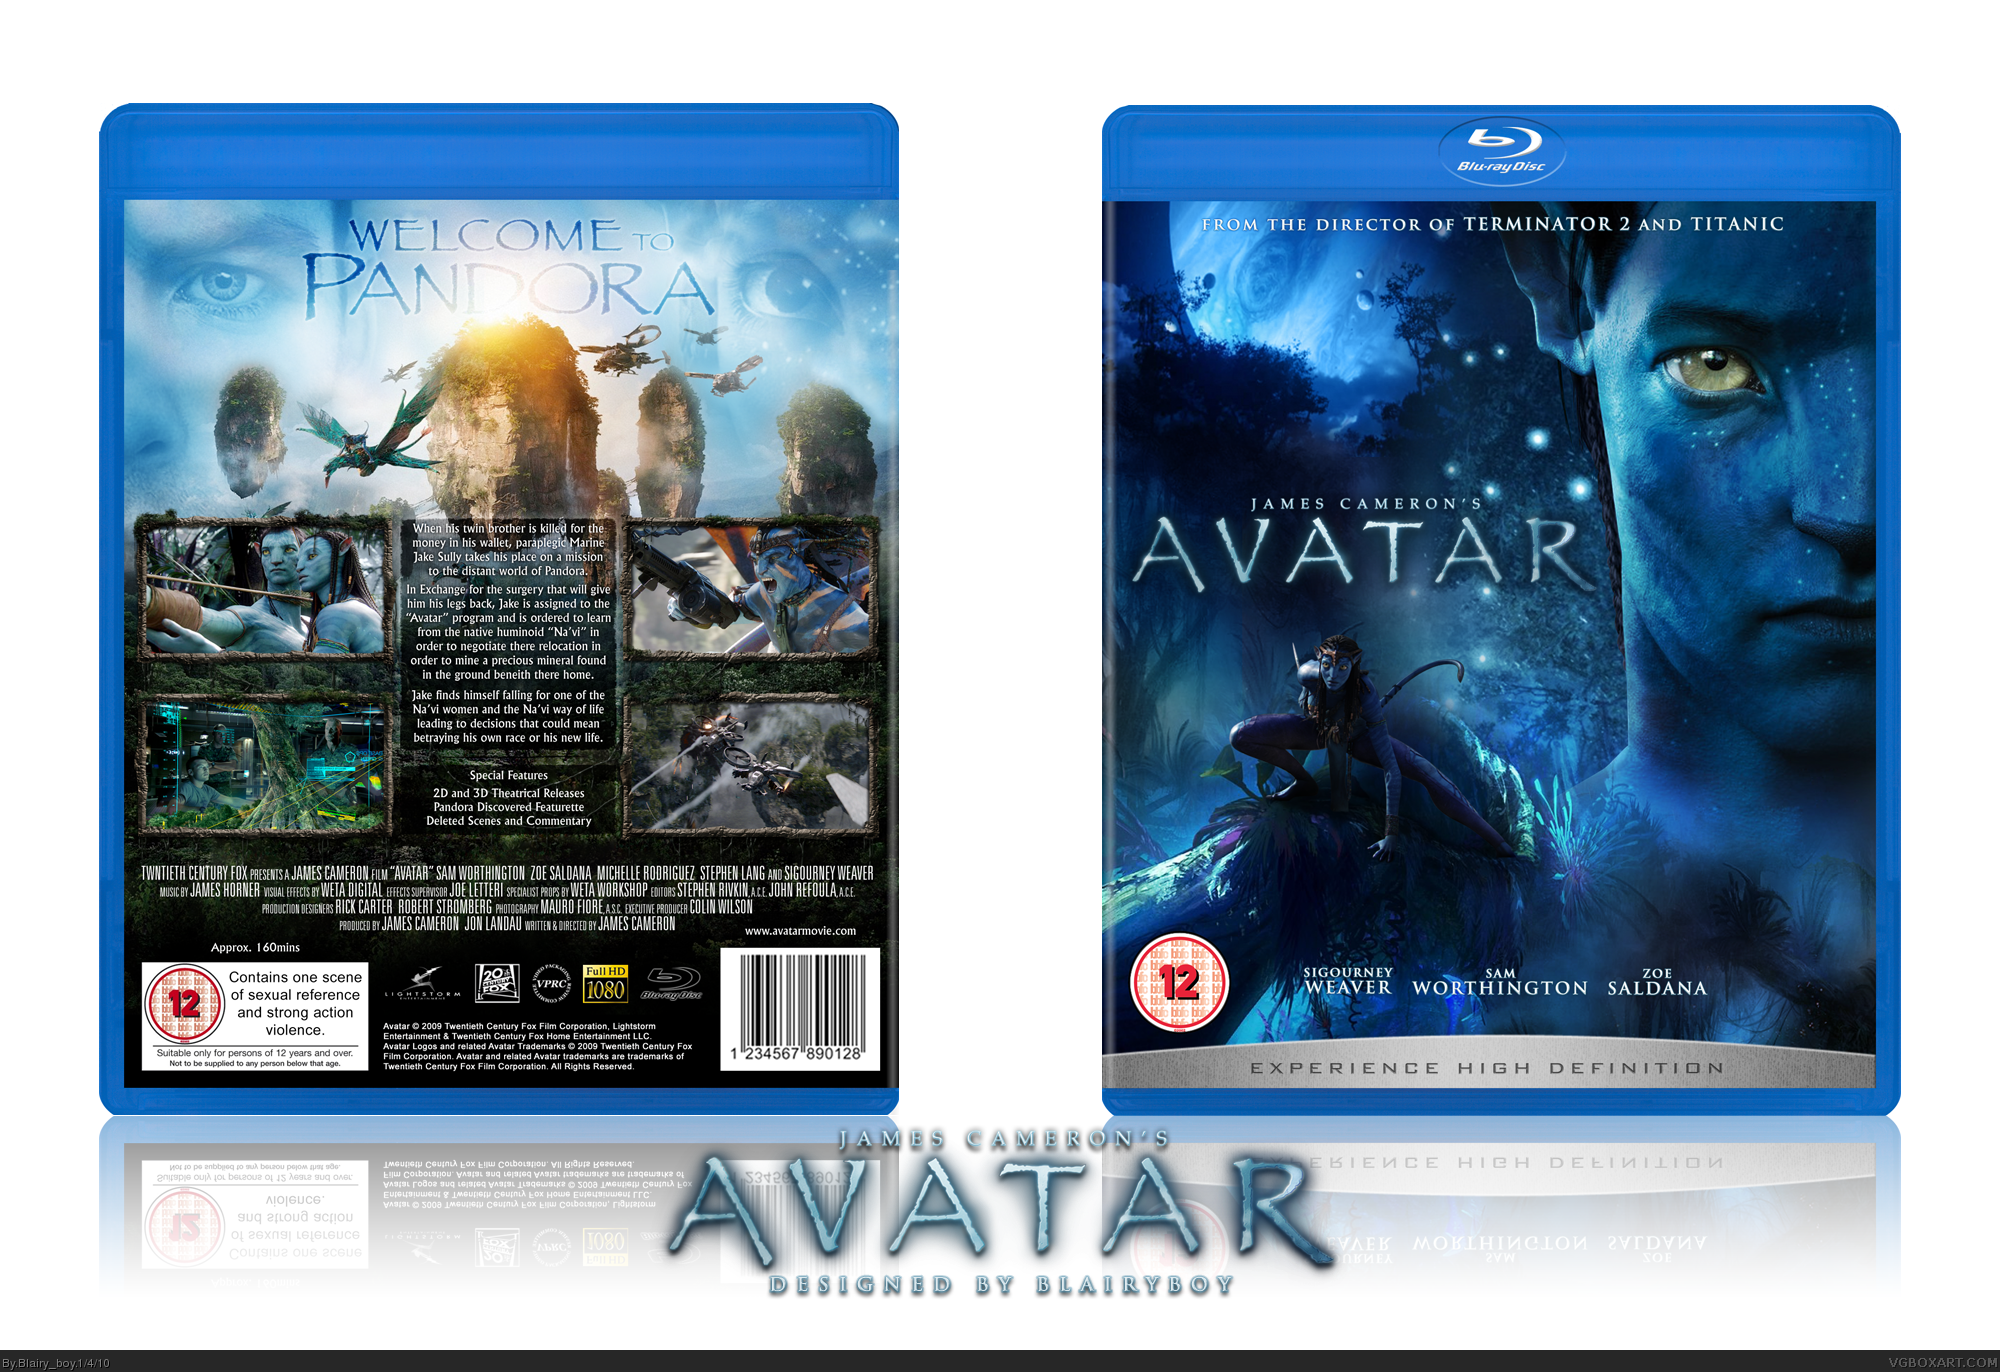 James Cameron's Avatar box cover